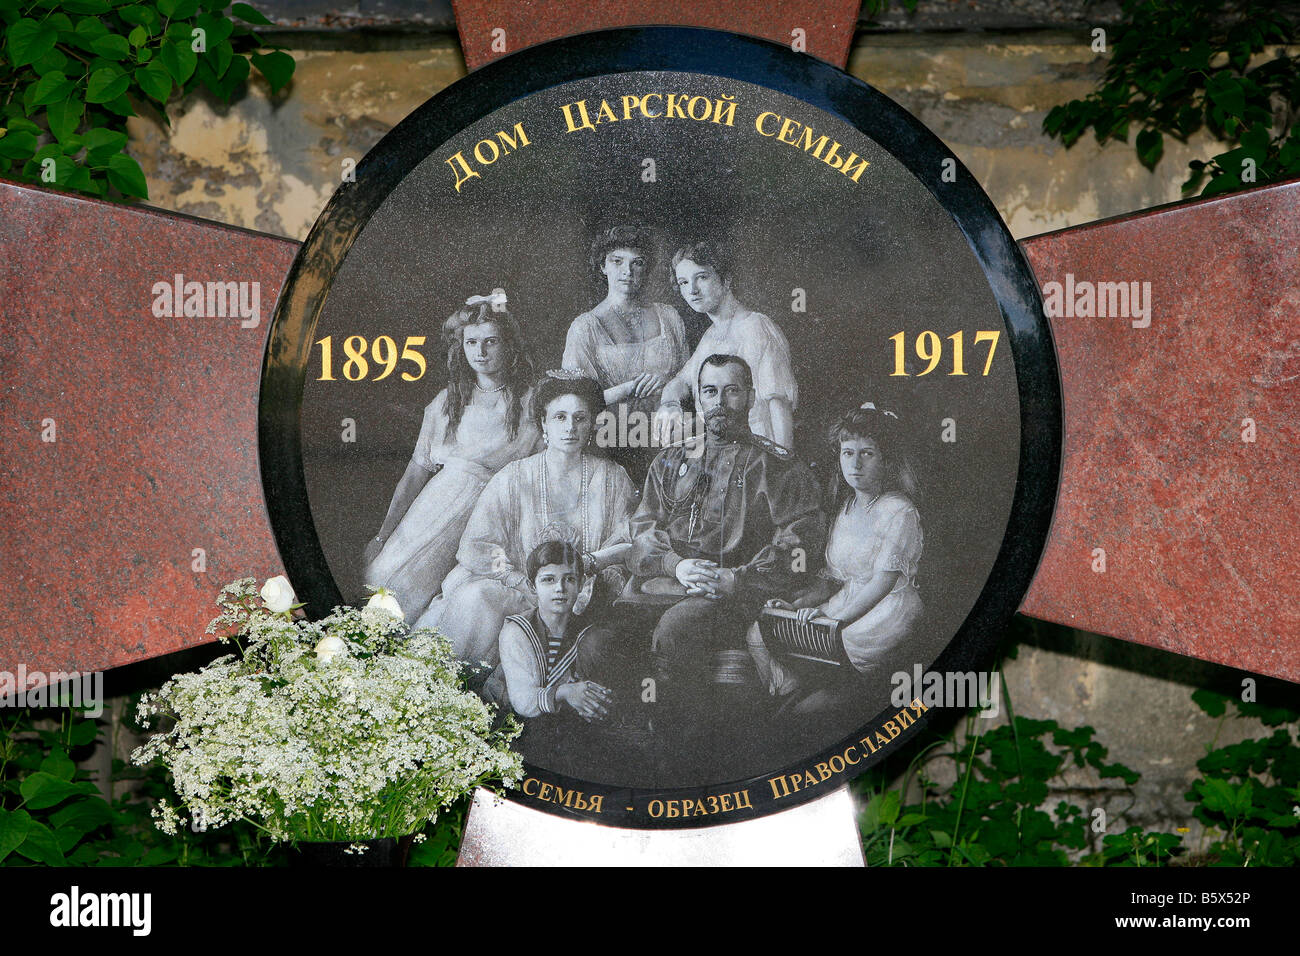 Memorial to the family of Tsar Nicolas II at Tsarskoye Selo Palace (Catherine Palace) in Pushkin, Russia Stock Photo